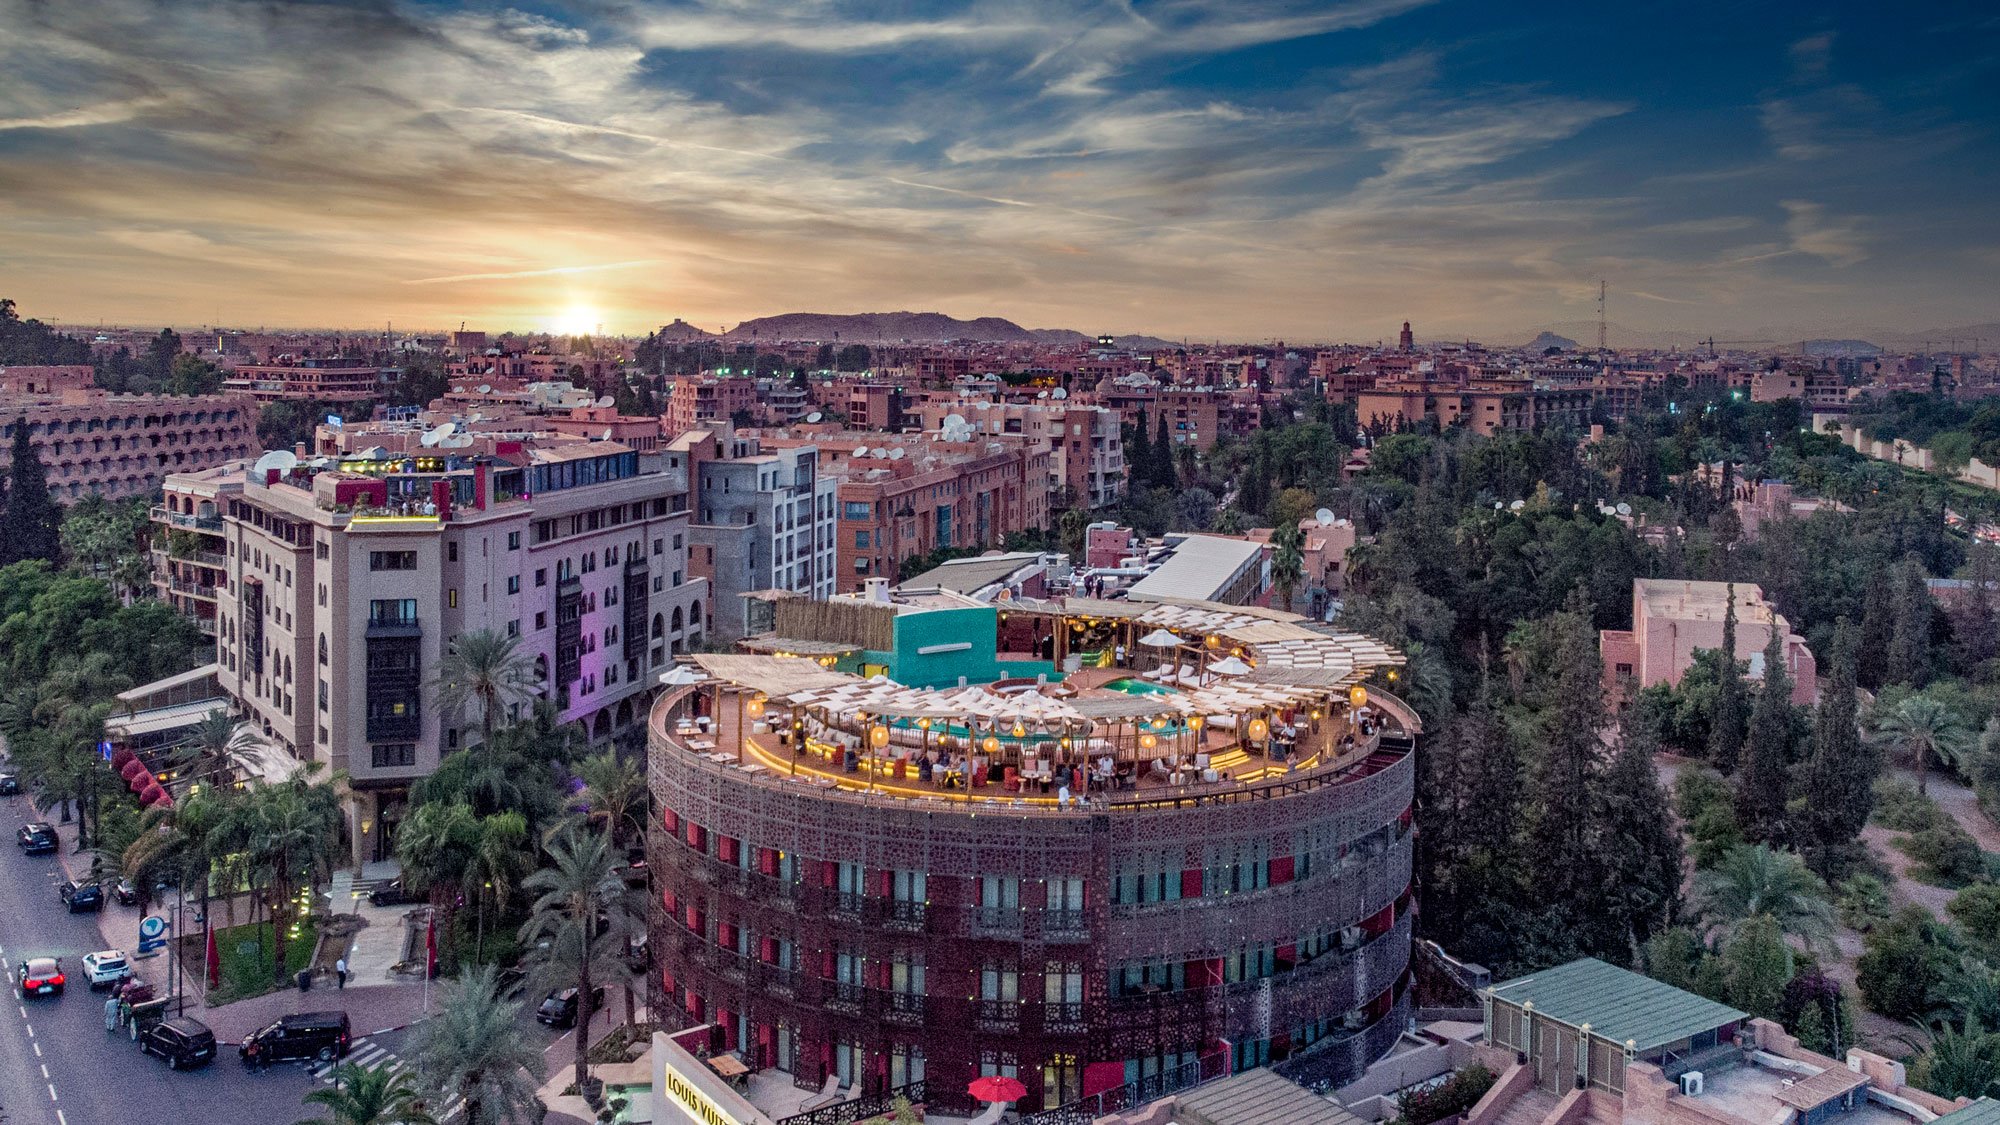 Nobu Hotel Marrakech Aerial View